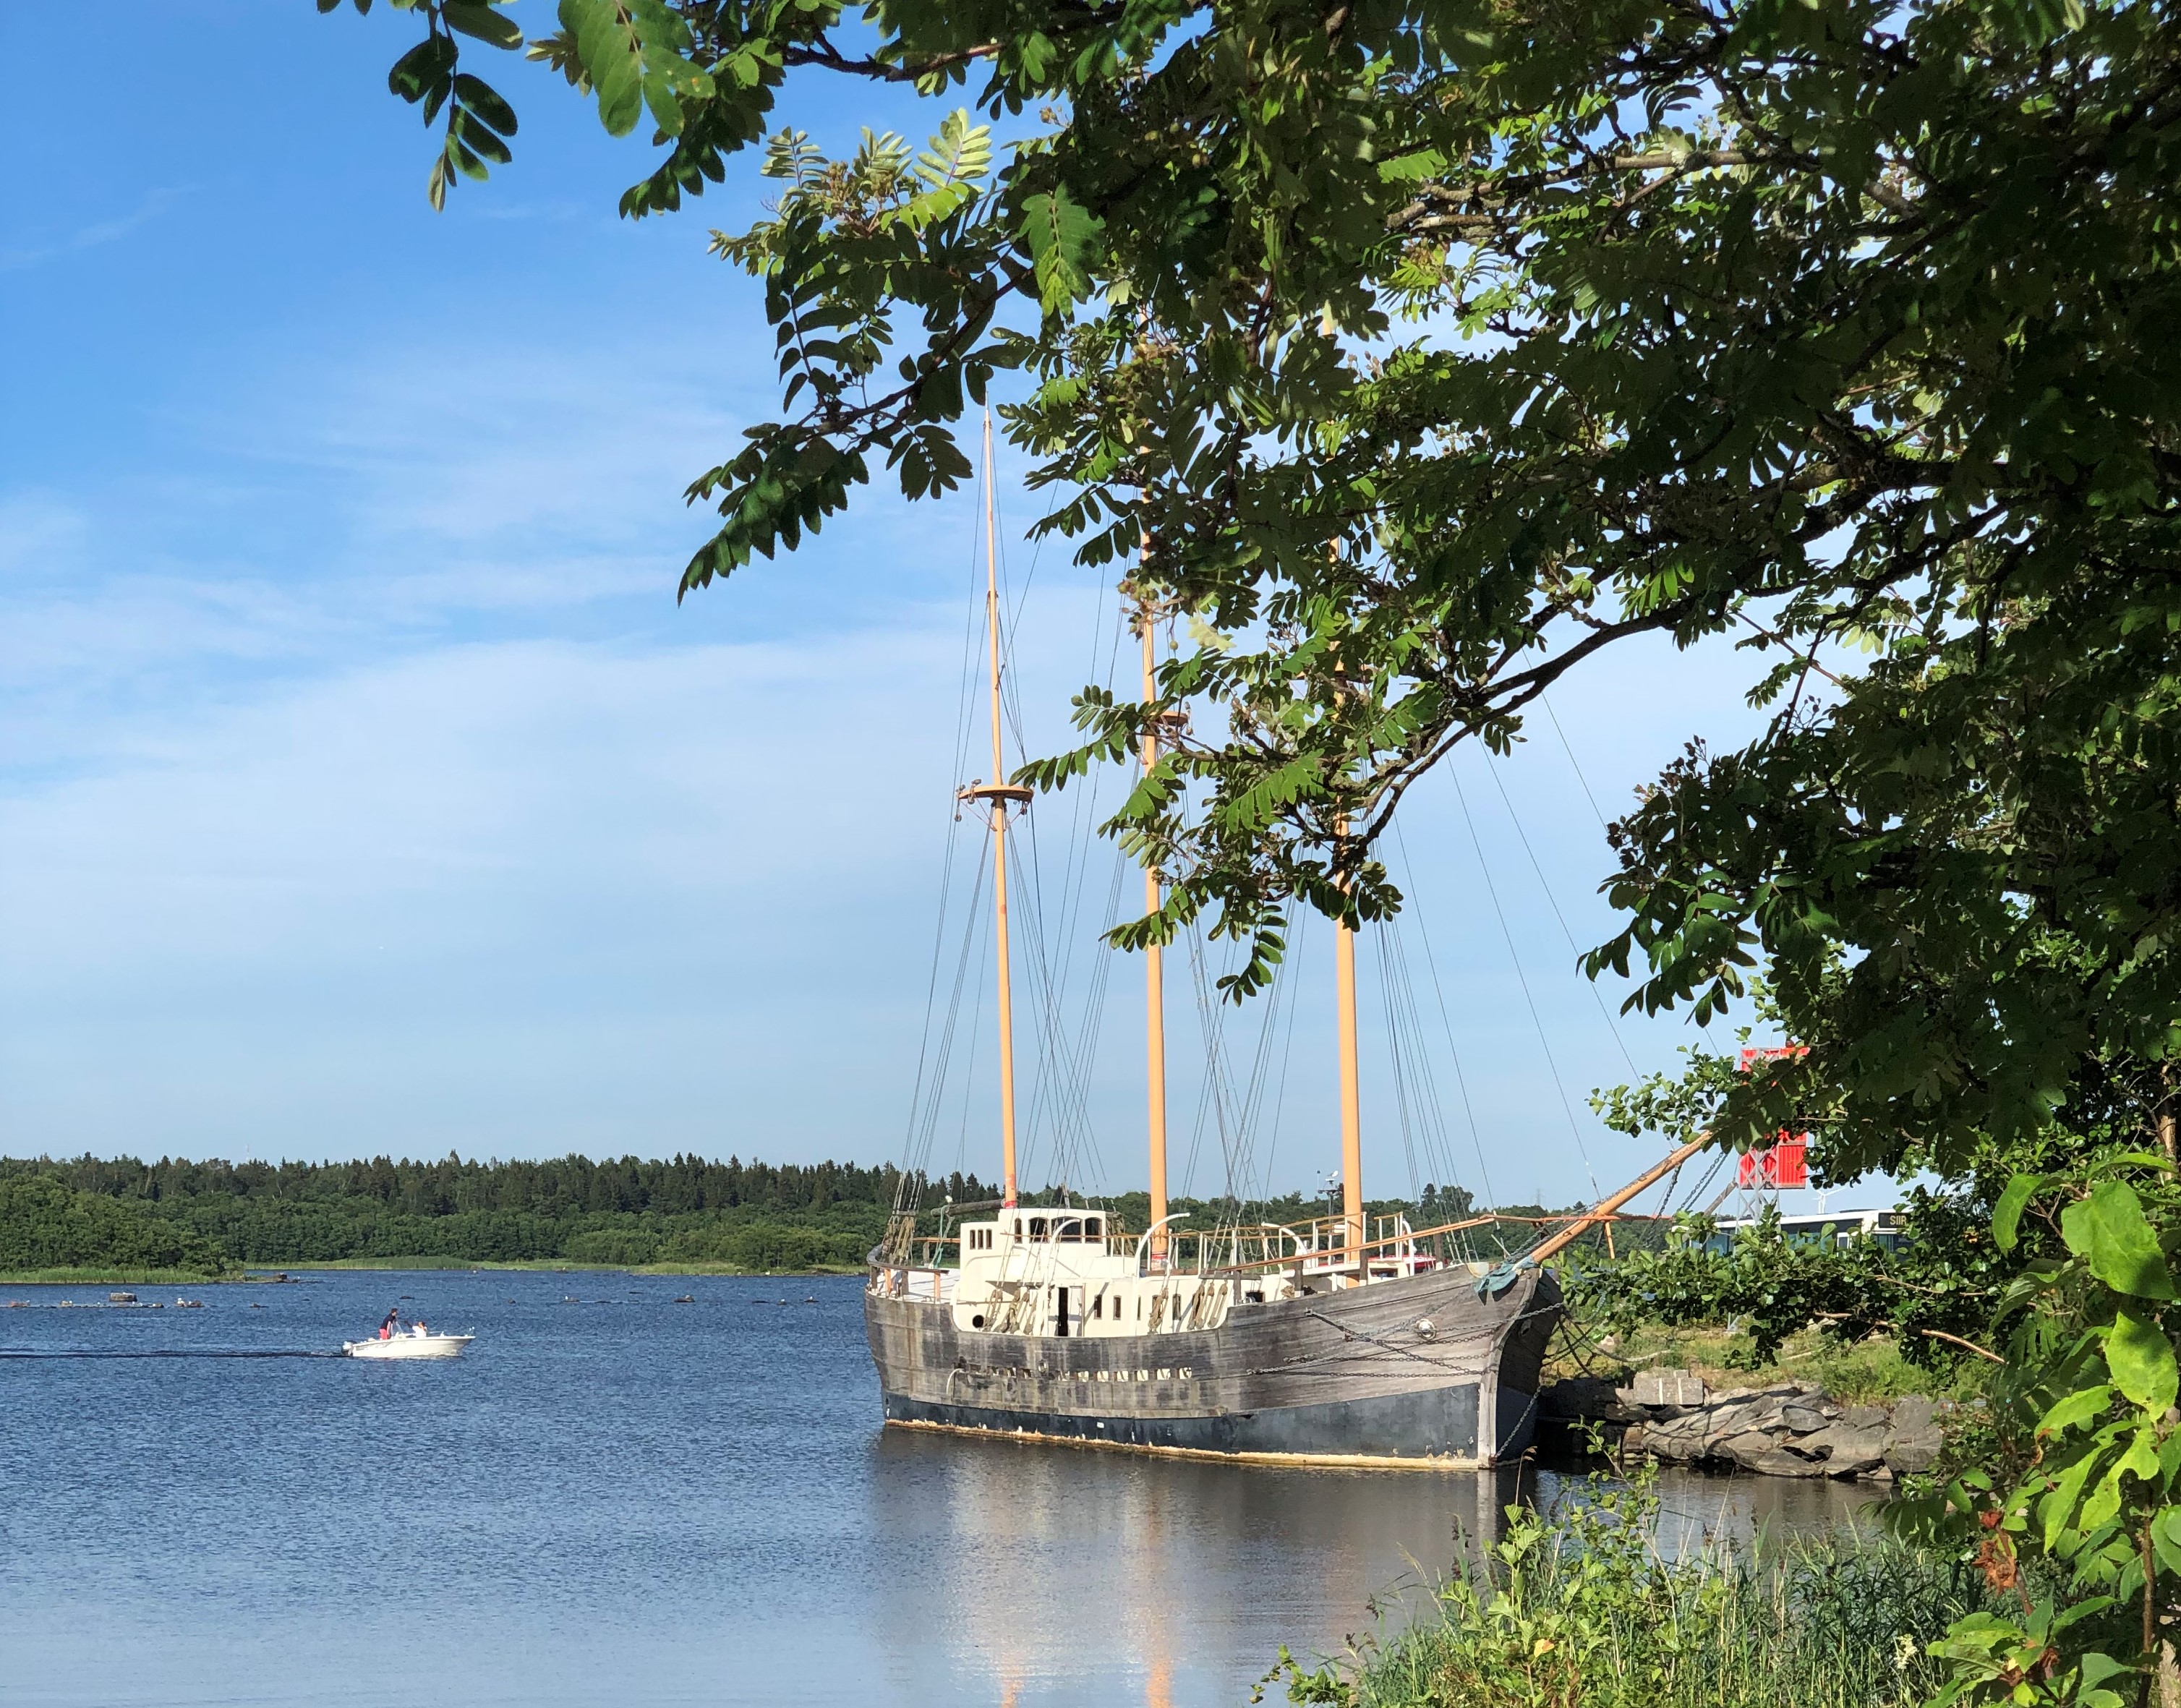 An old sailing ship at anchor on the shores of Reposaari in Finland